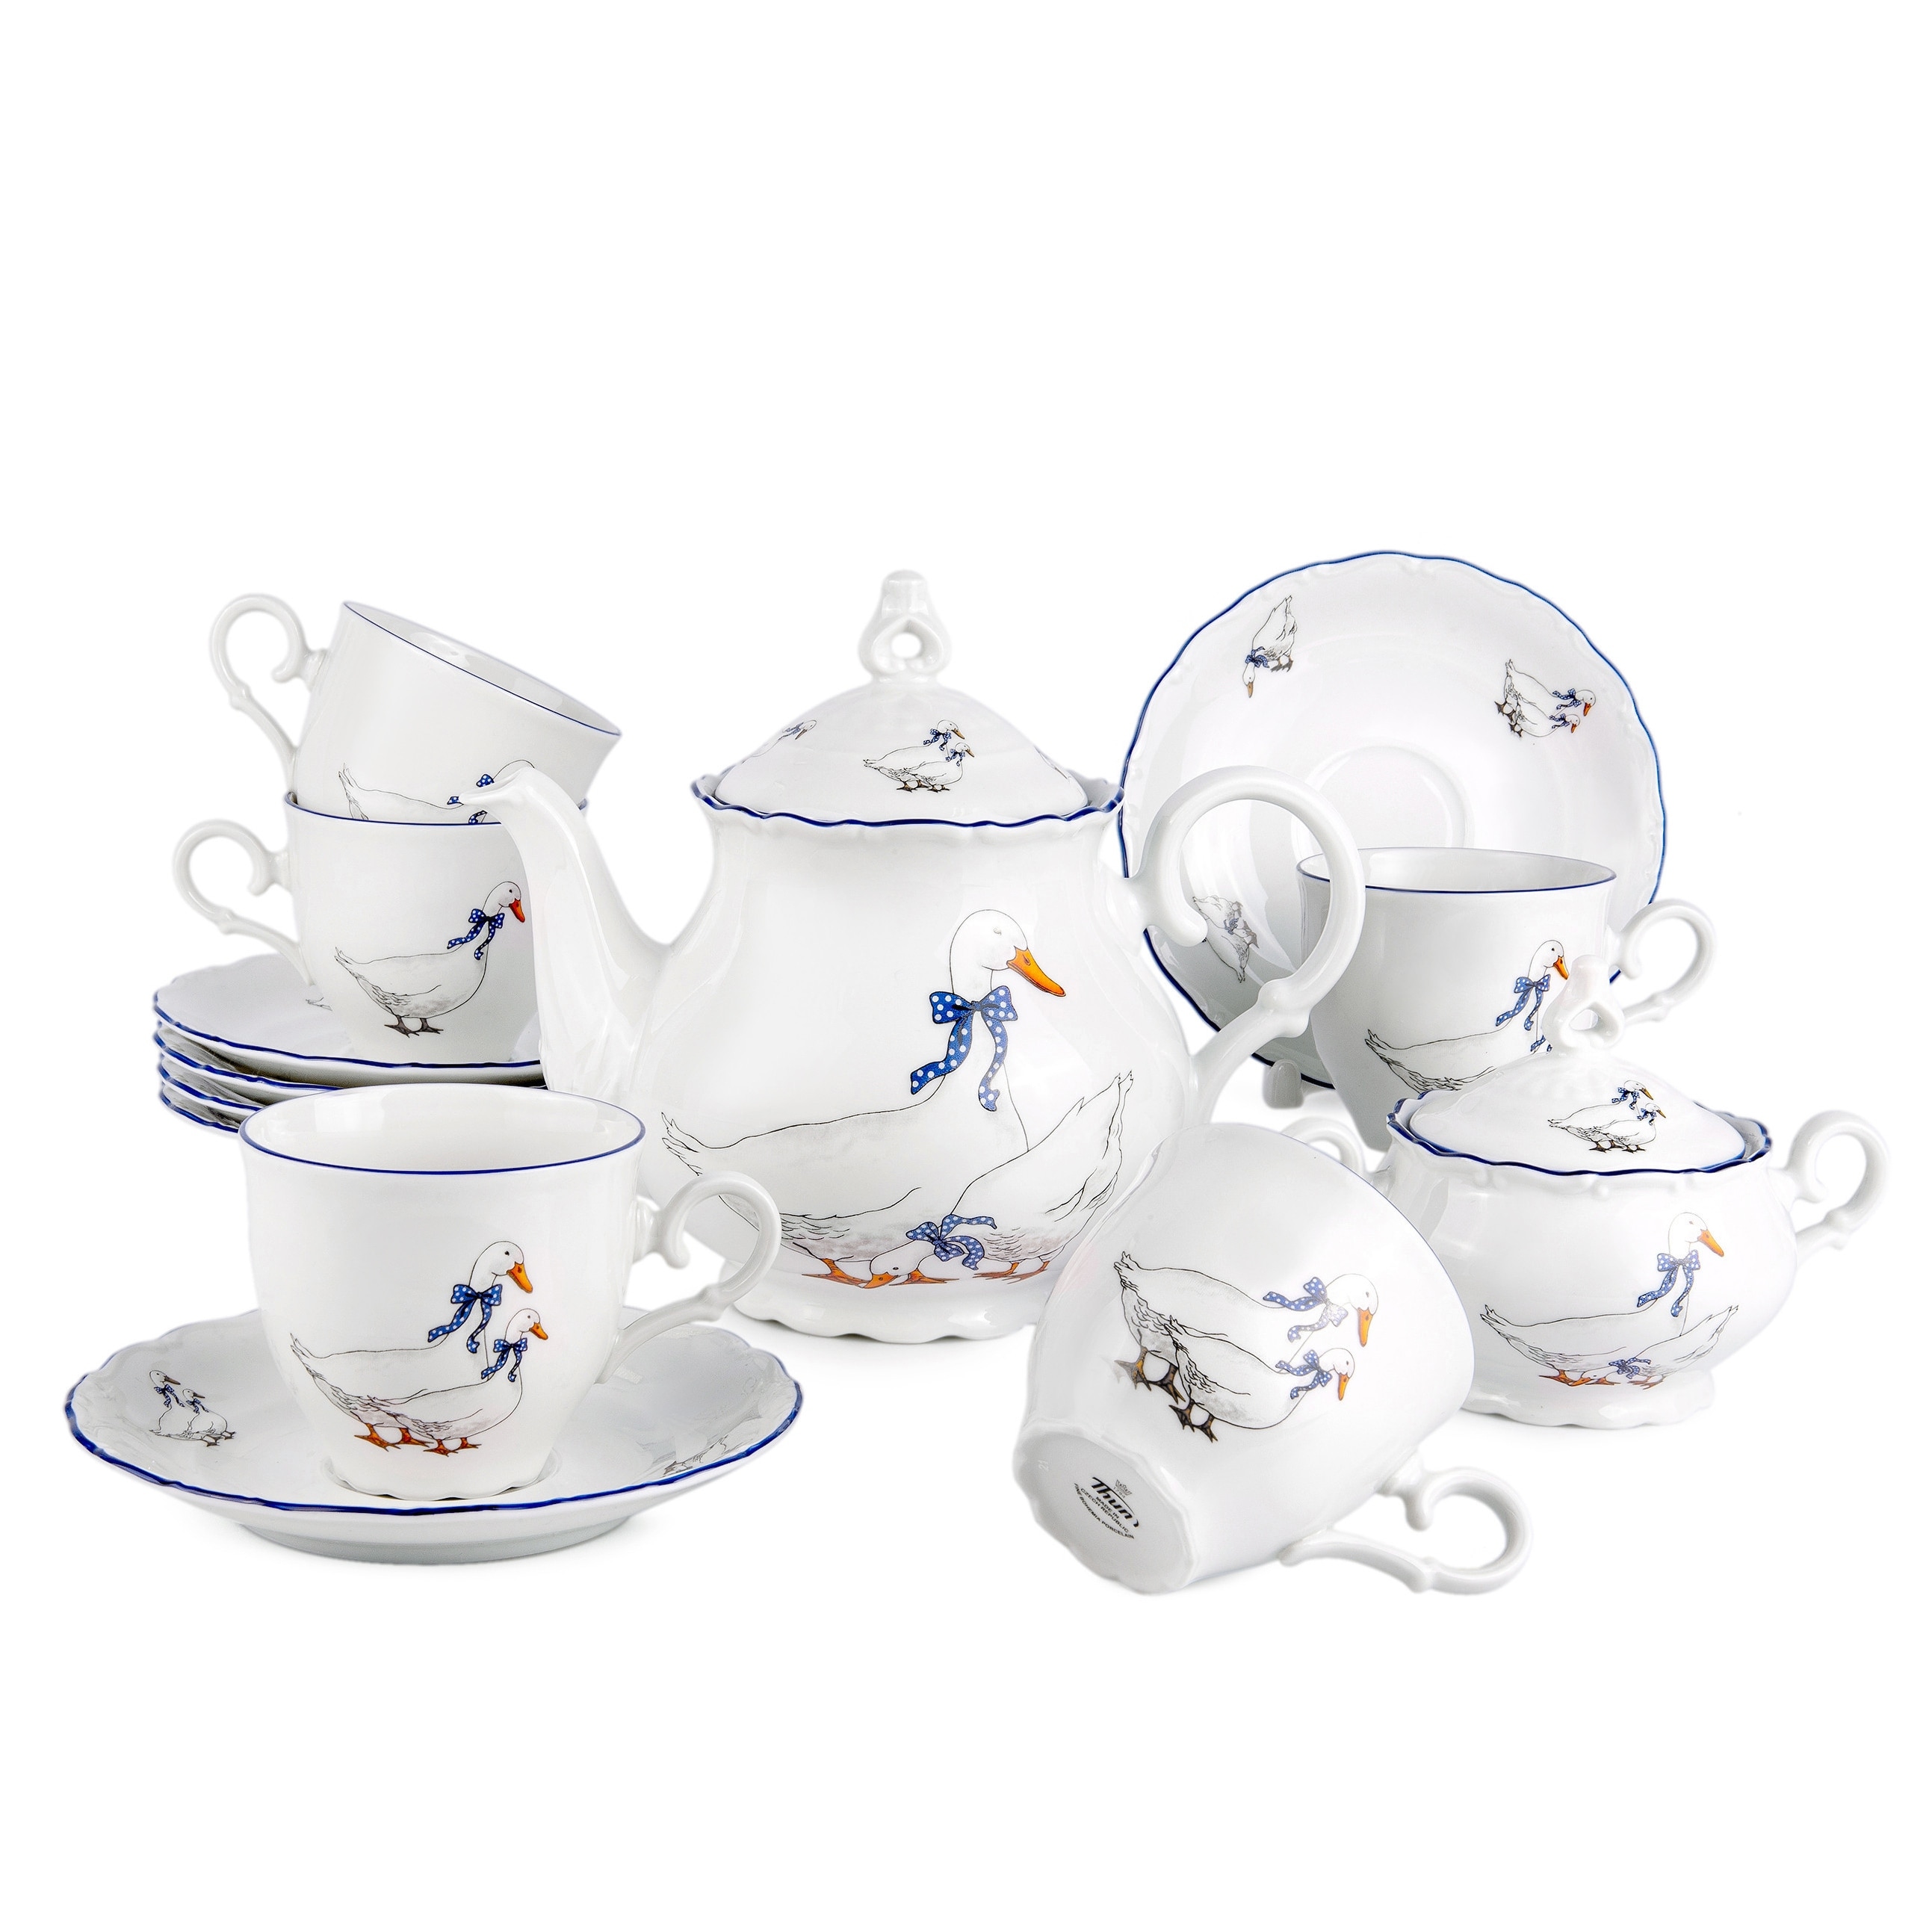 Goose Family White Porcelain Tea Set of 14 for 6 pers.